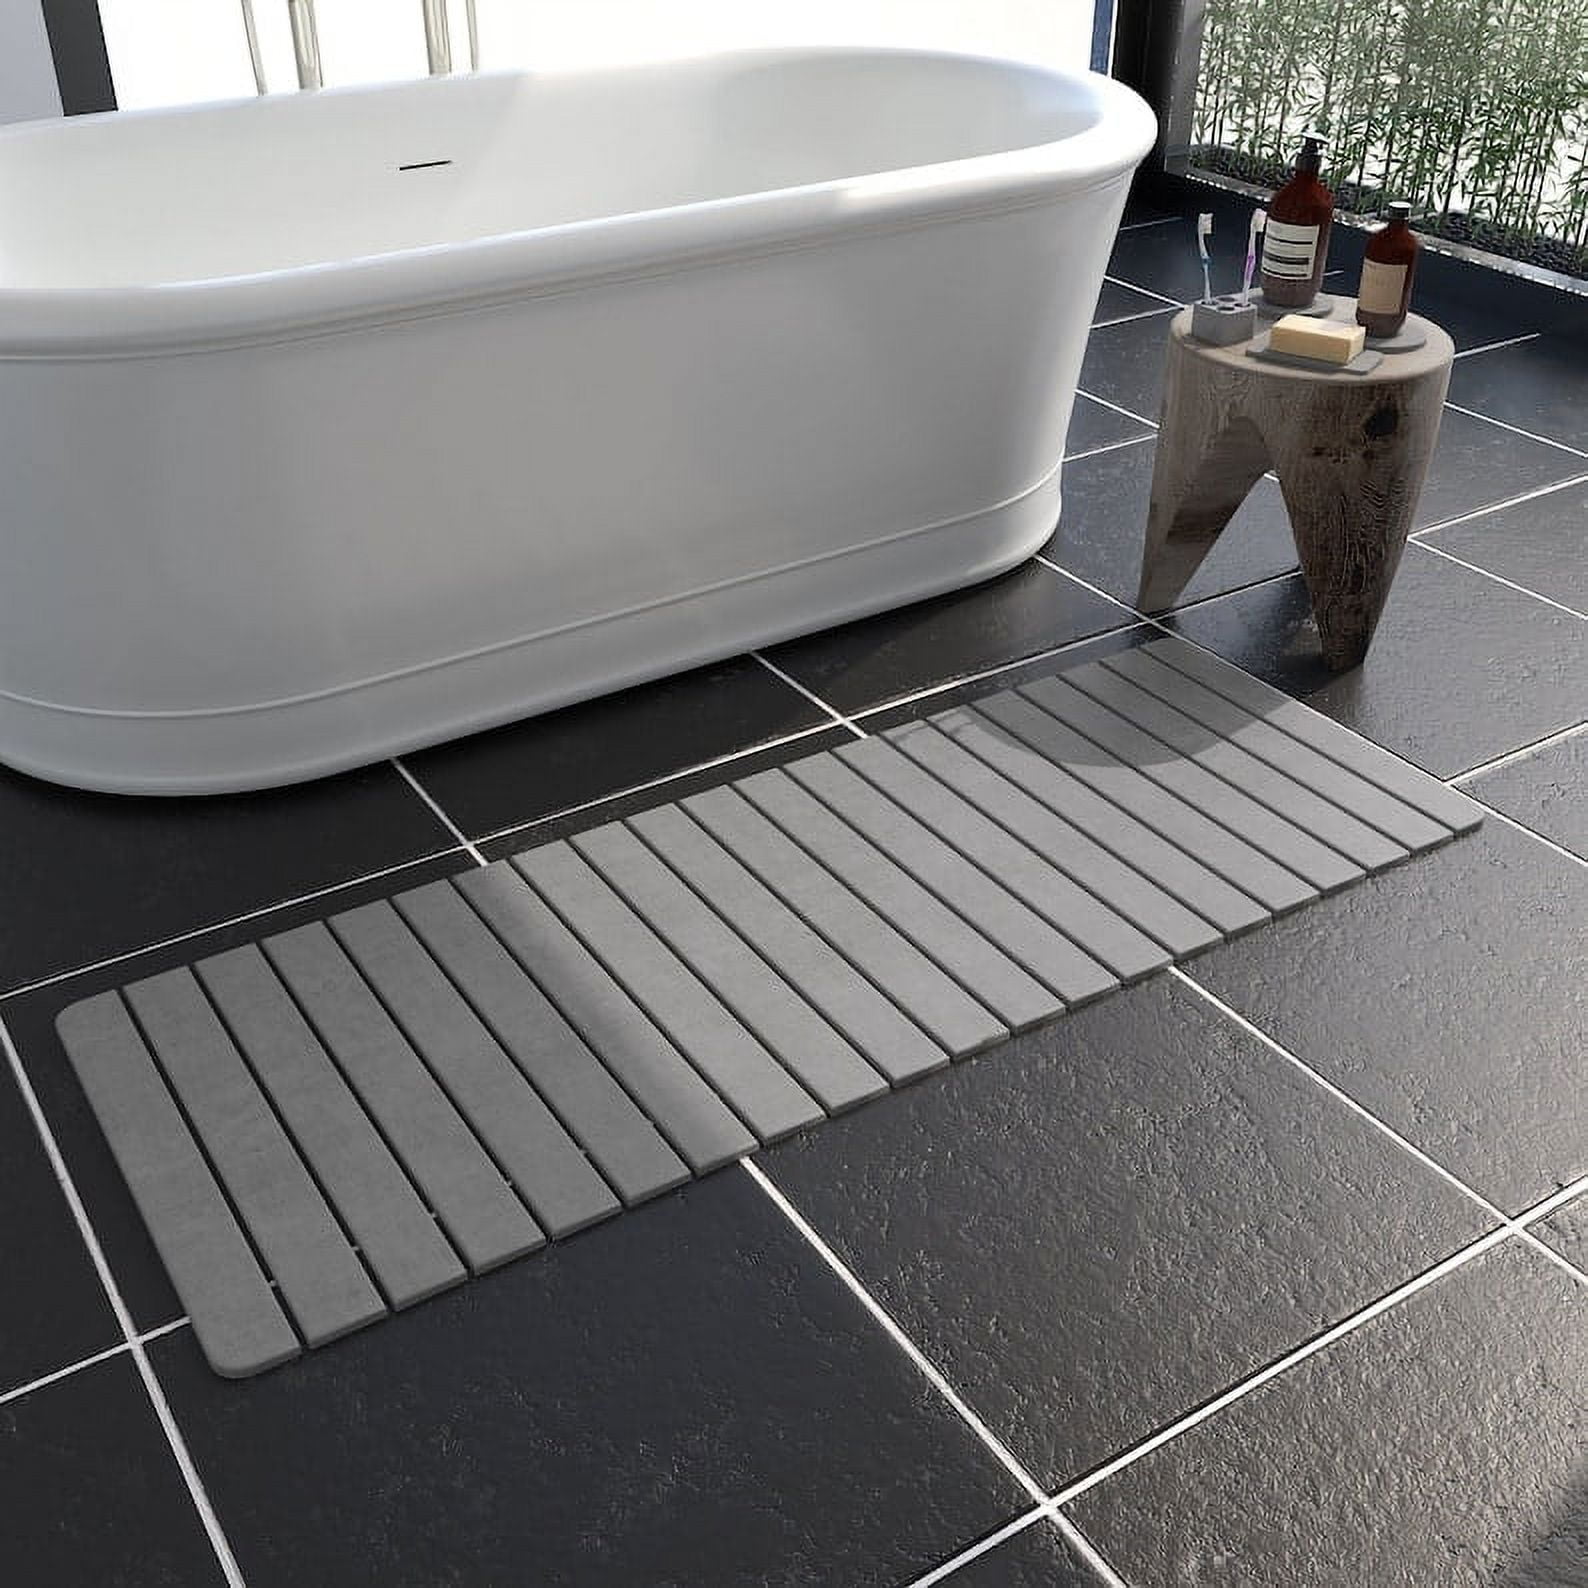 Graplife Stone Bath Mat, Fast Drying Shower Mat, with Anti Slip Pad, 23.62  x 15.35, White 